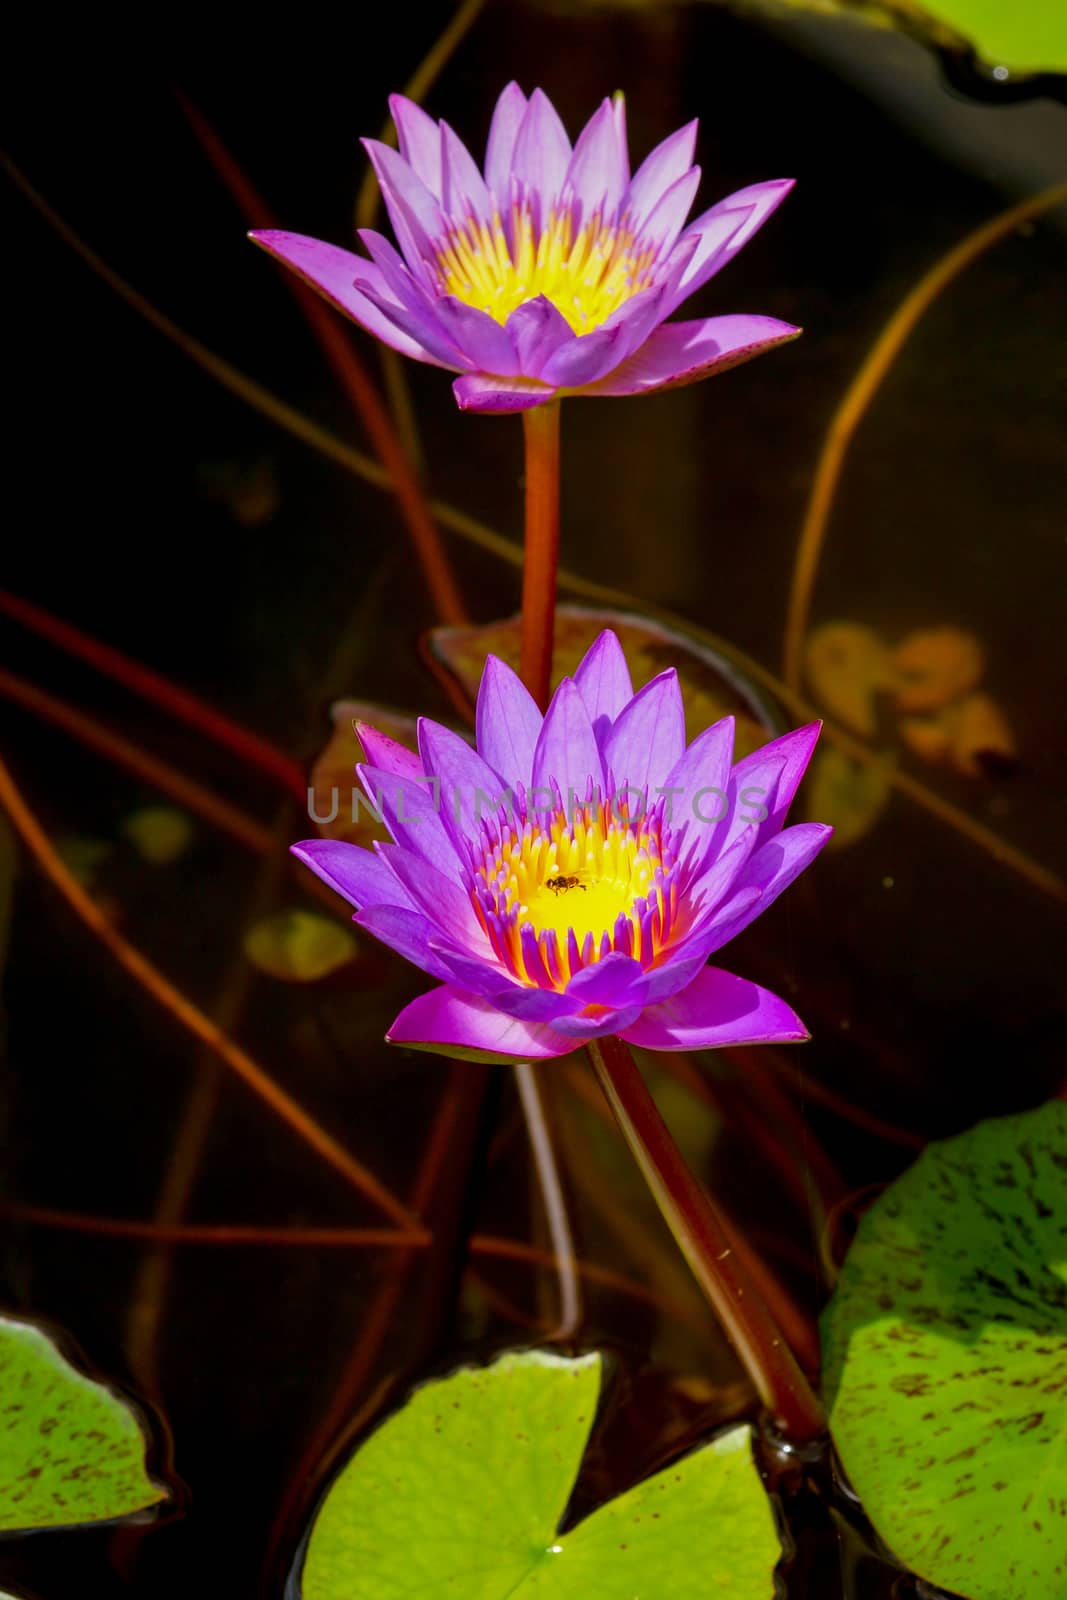 Lotus flower blooming in the rainy season. by Noppharat_th